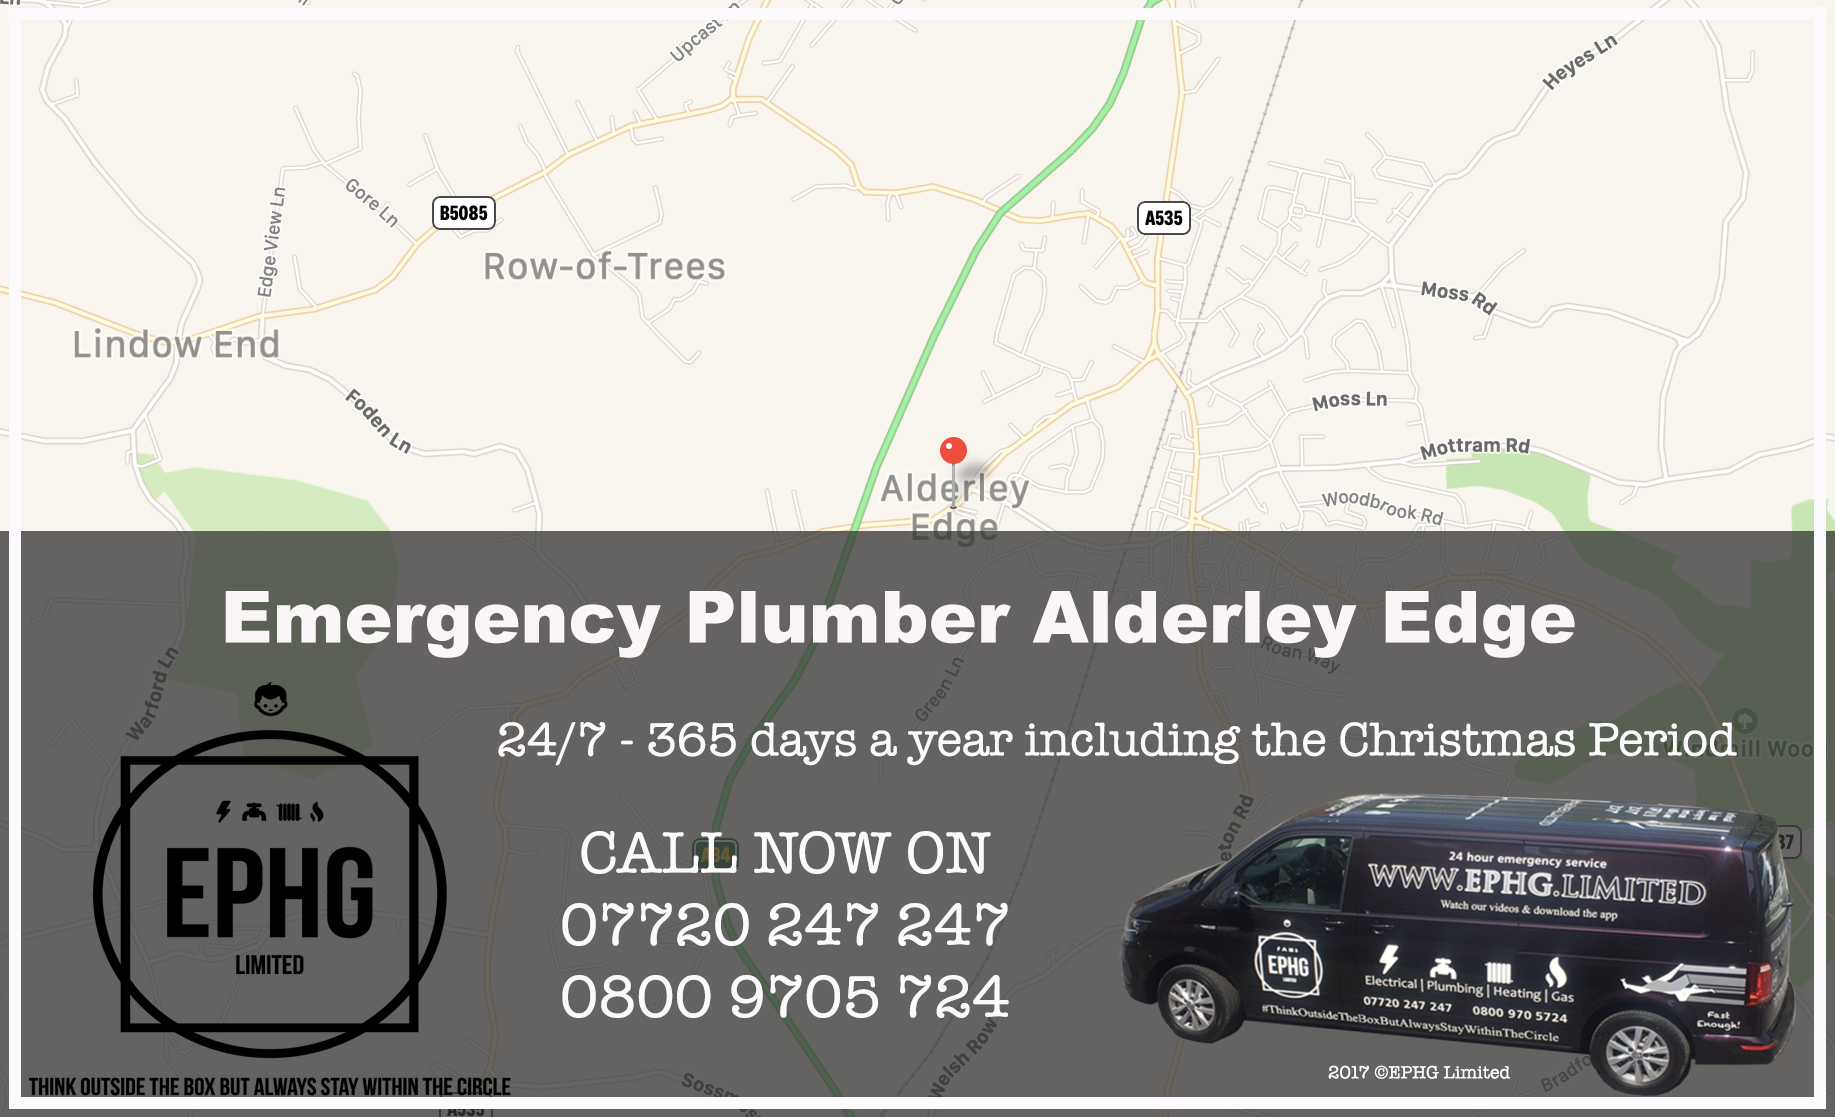 24 Hour Emergency Plumber Alderley Edge